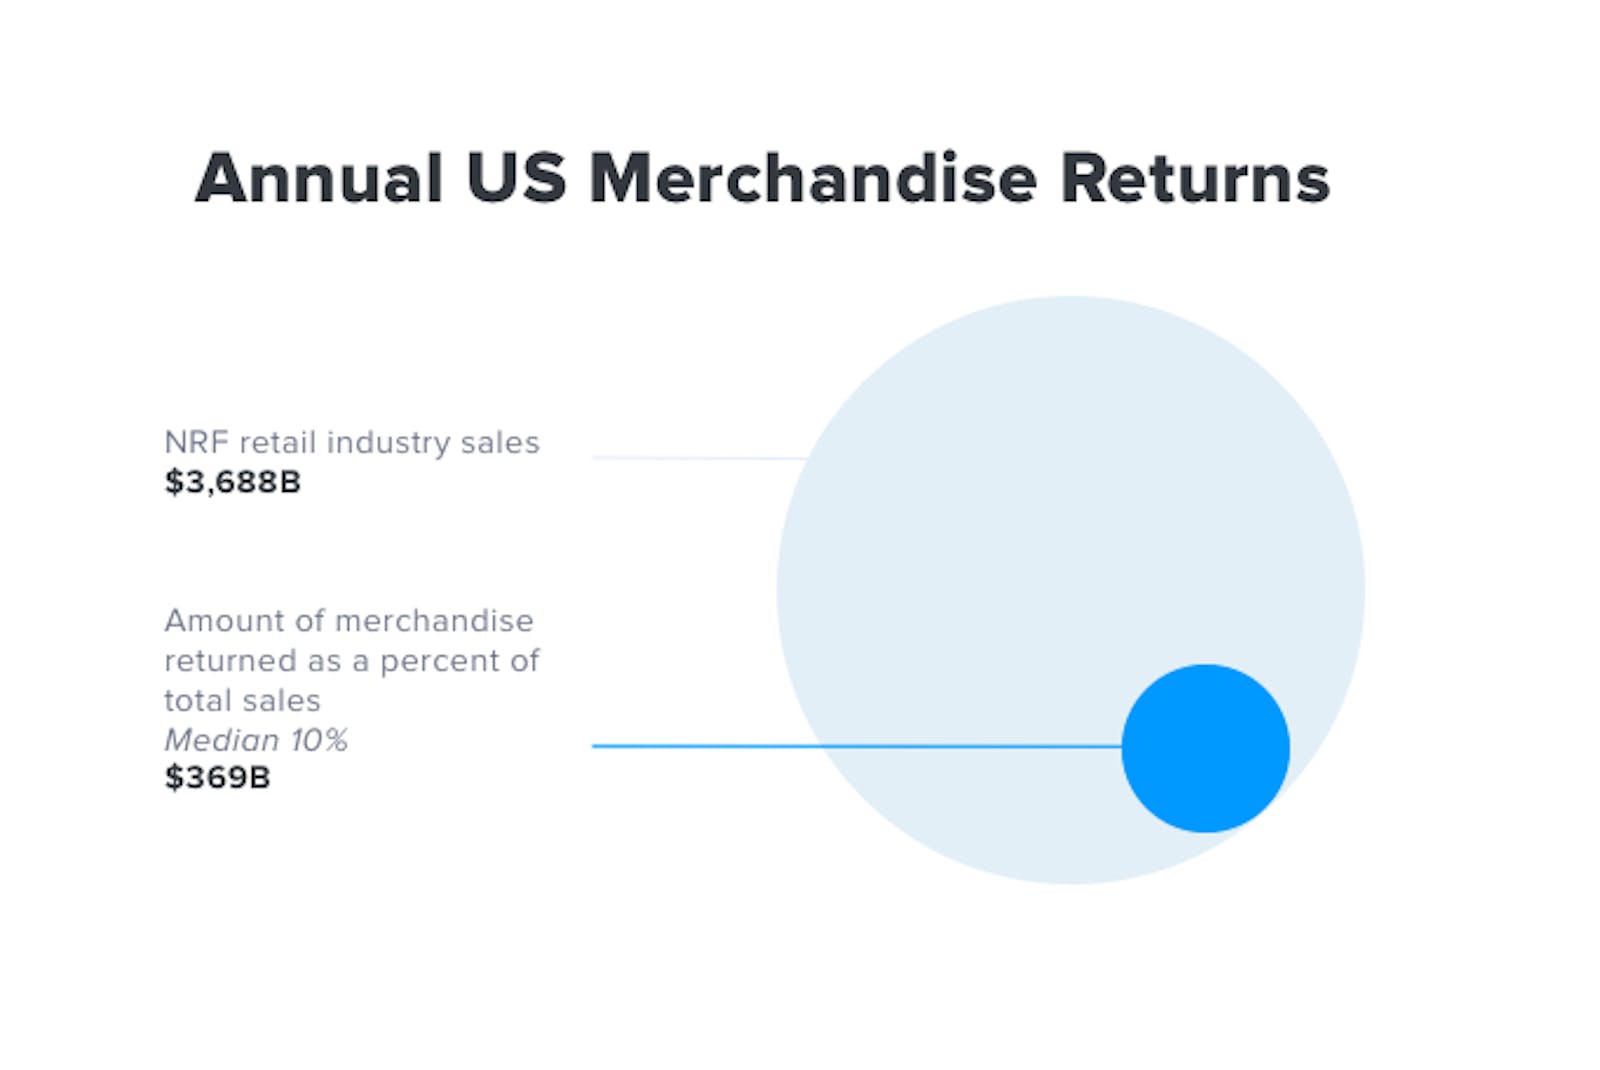 returns equal 10% of total US retail sales